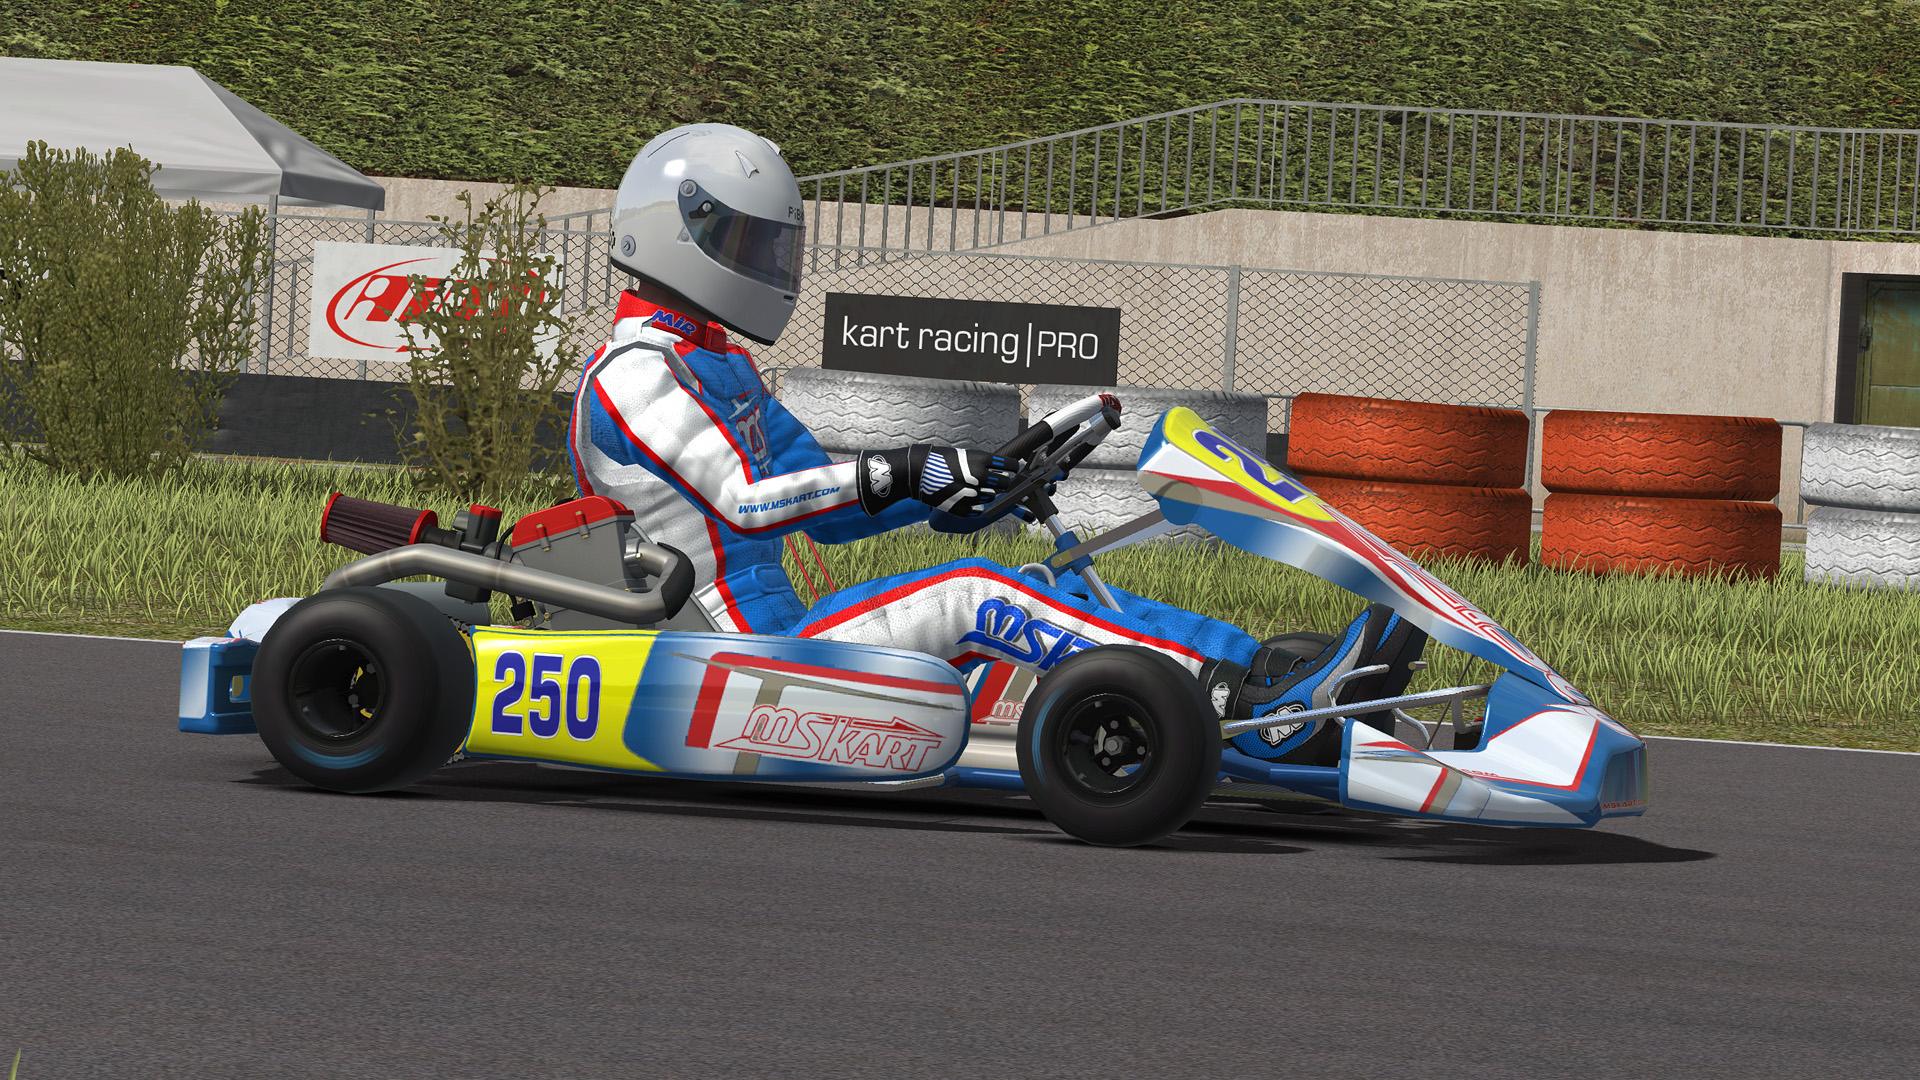 Kart Racing Pro. Картинг GP Racing 2008 года. Картинг АКУ 89. Игры про картинг на ПК.